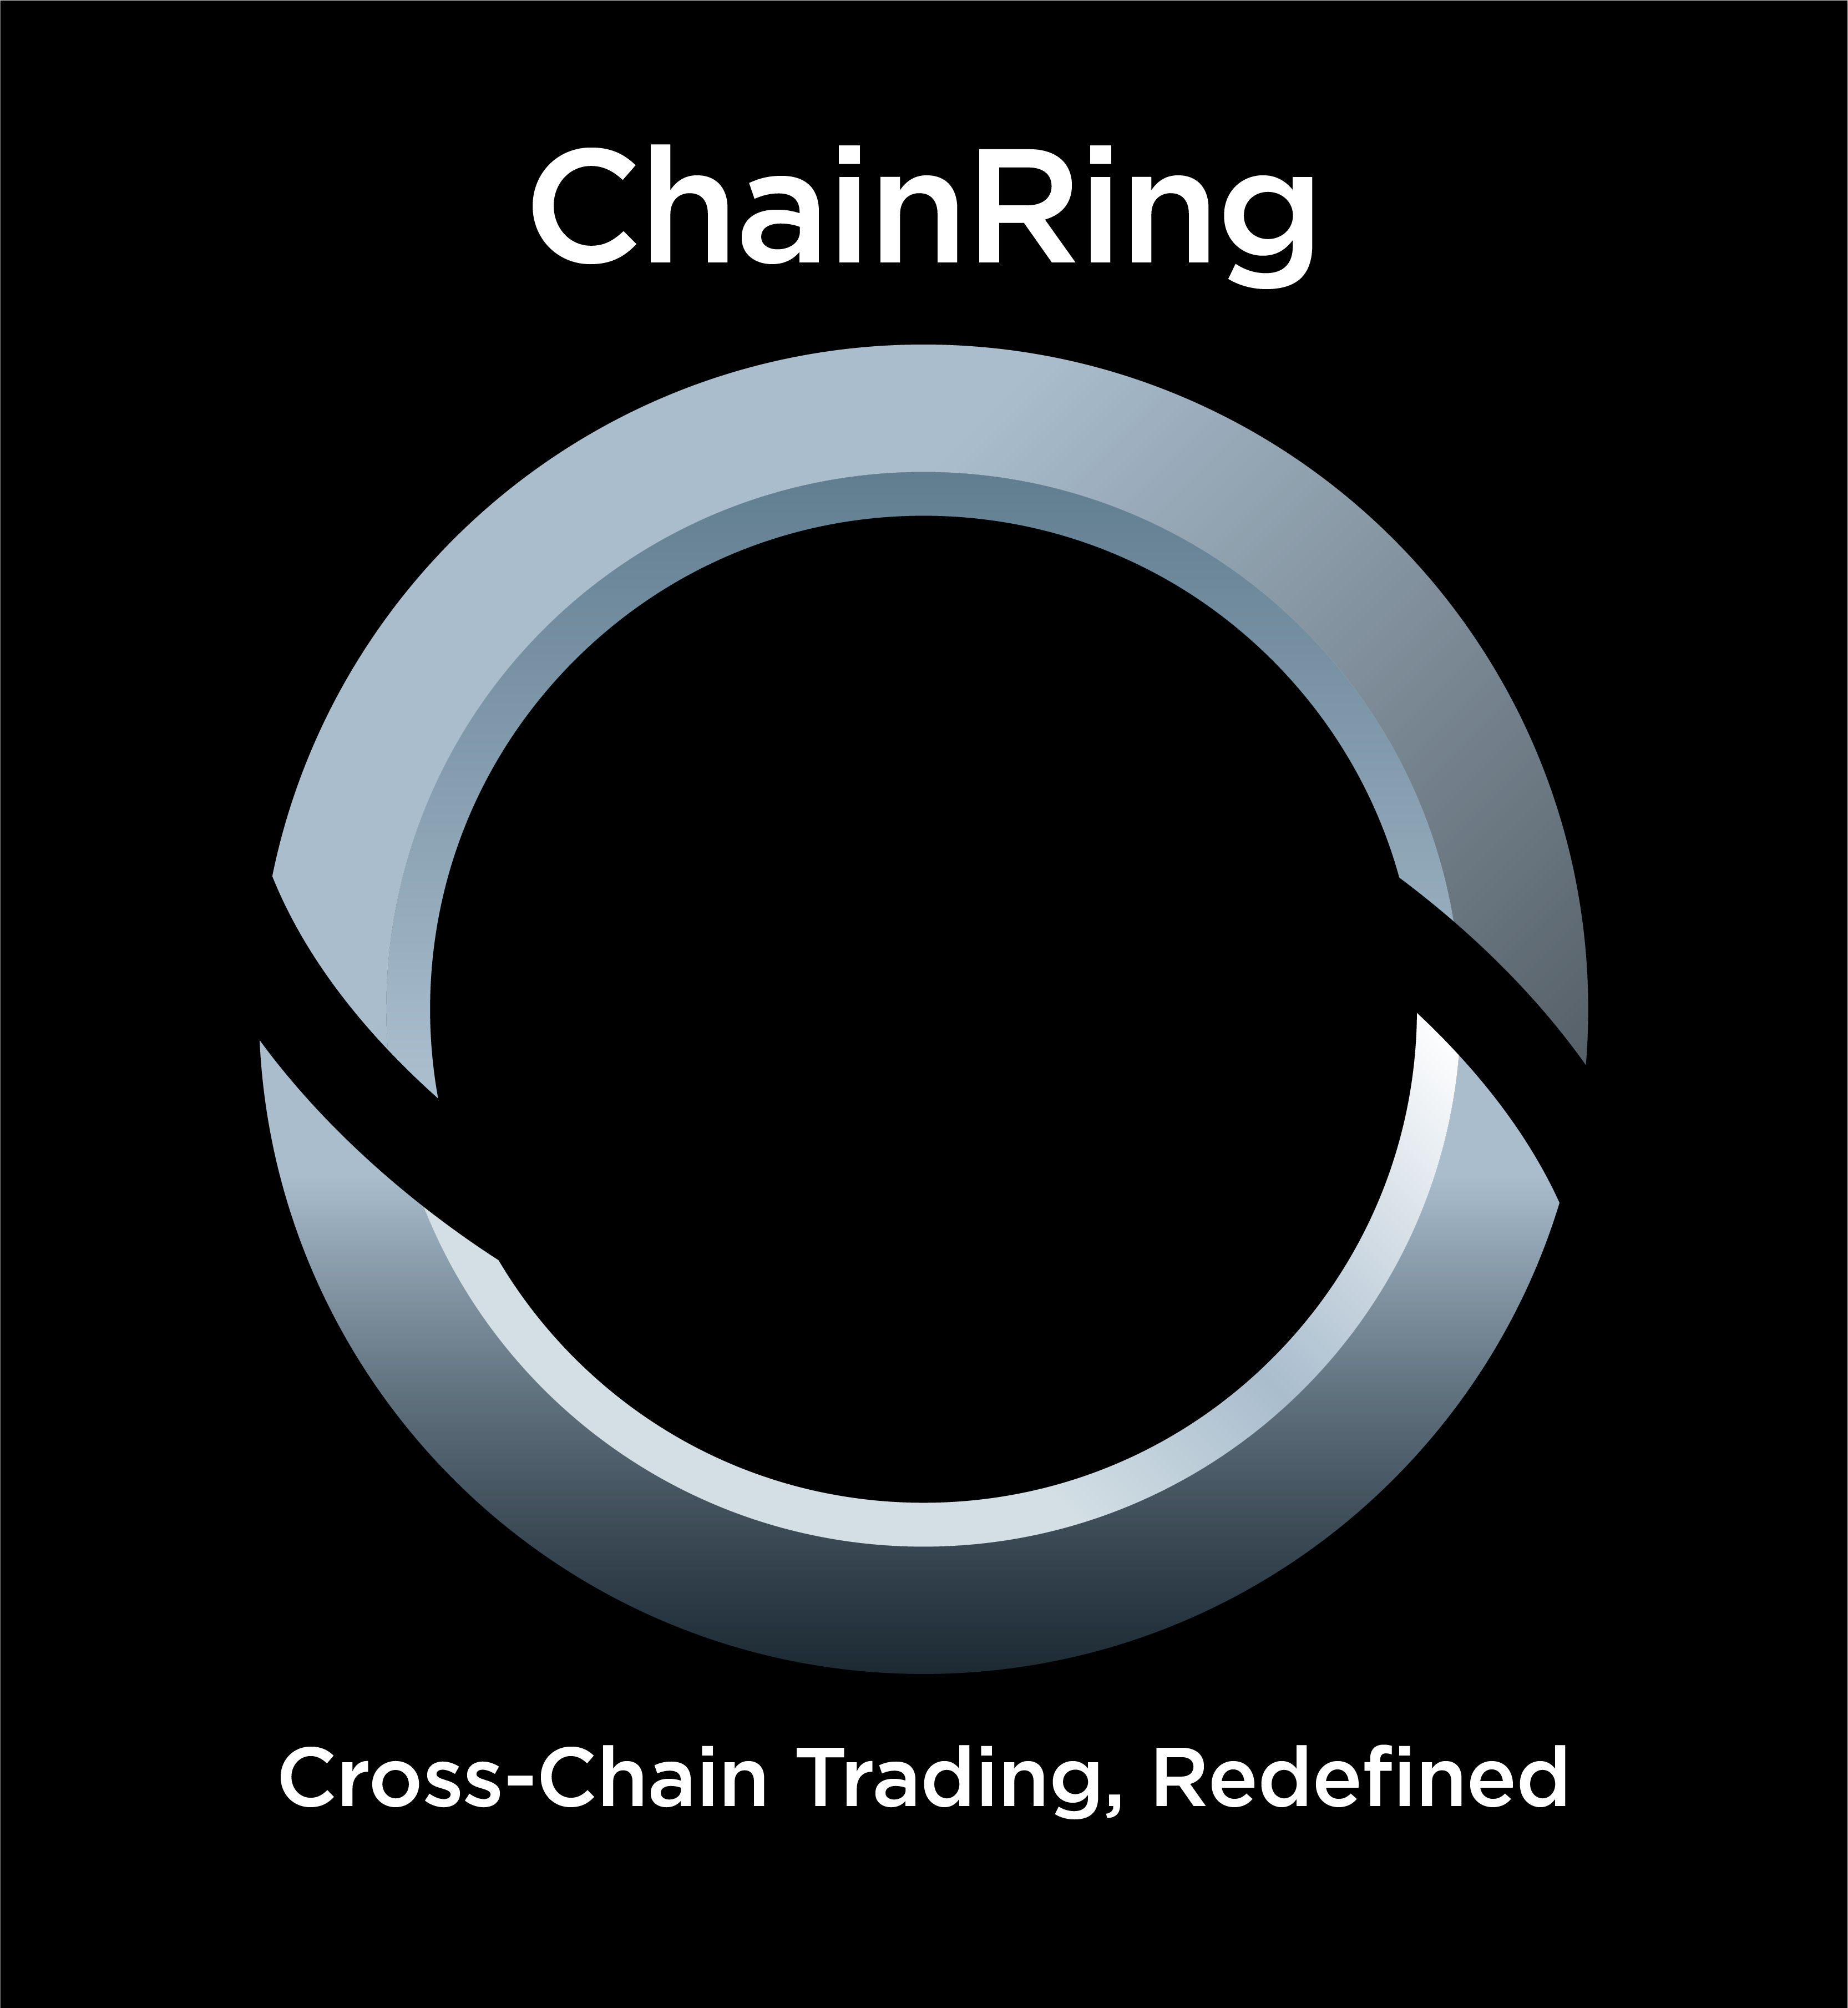 ChainRing